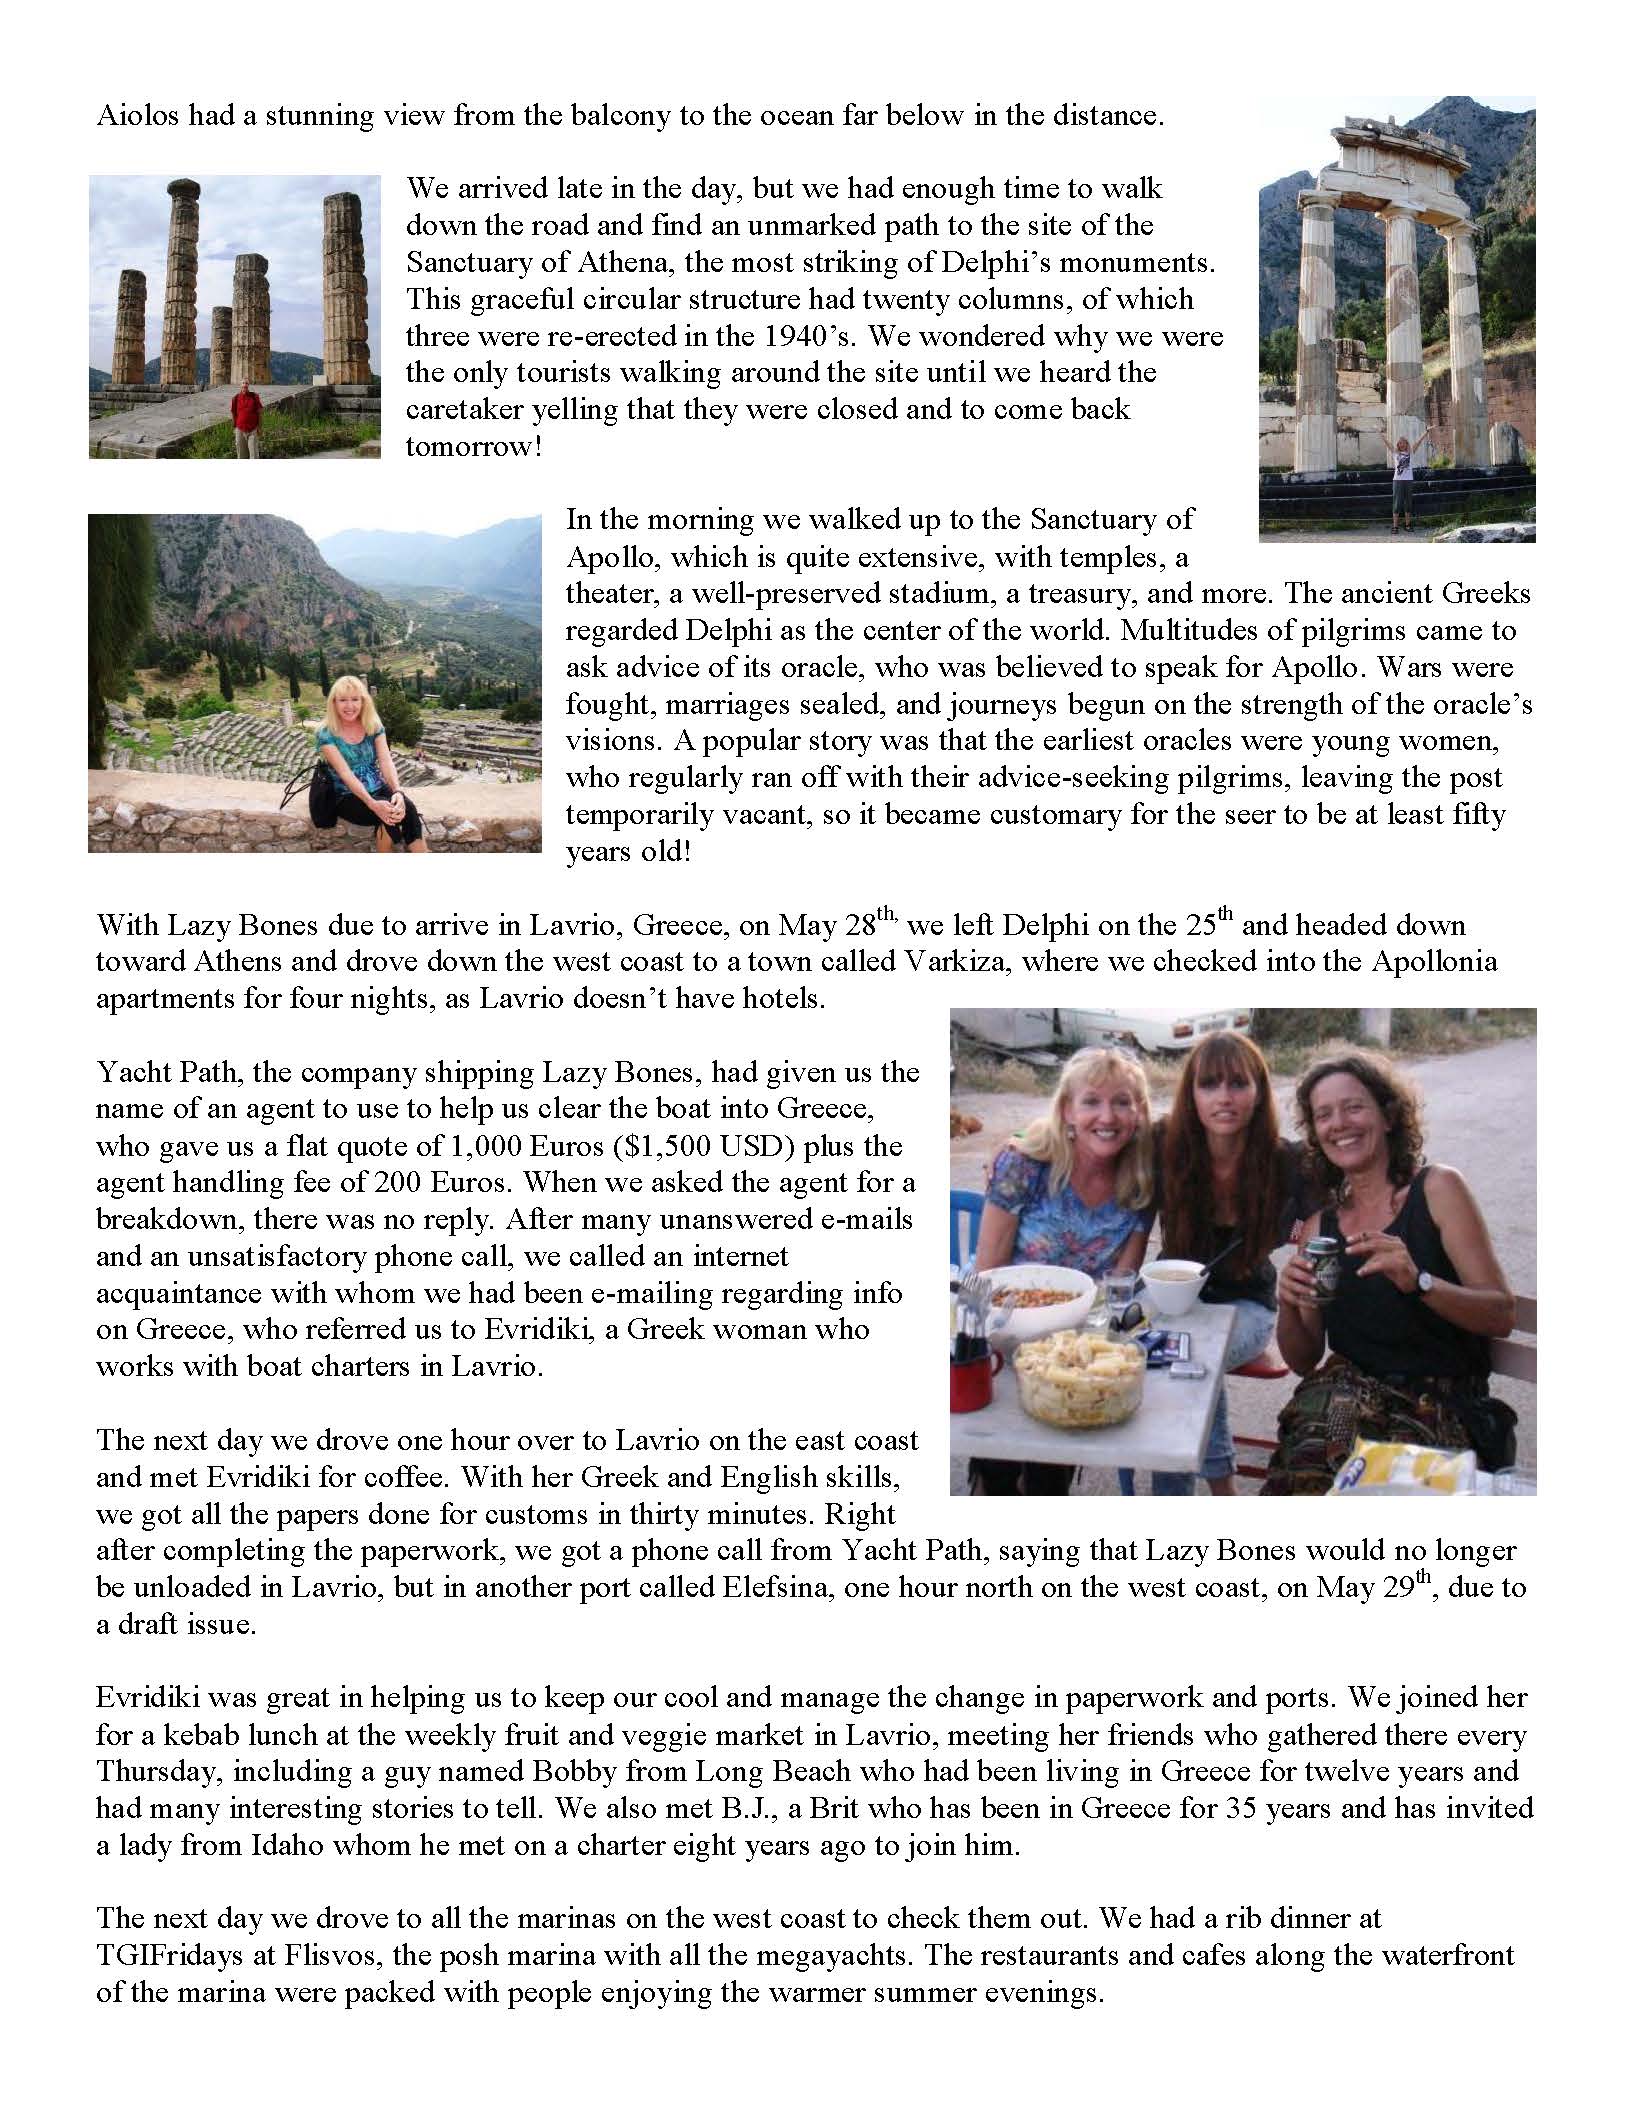 Cruising Mainland Greece page 4